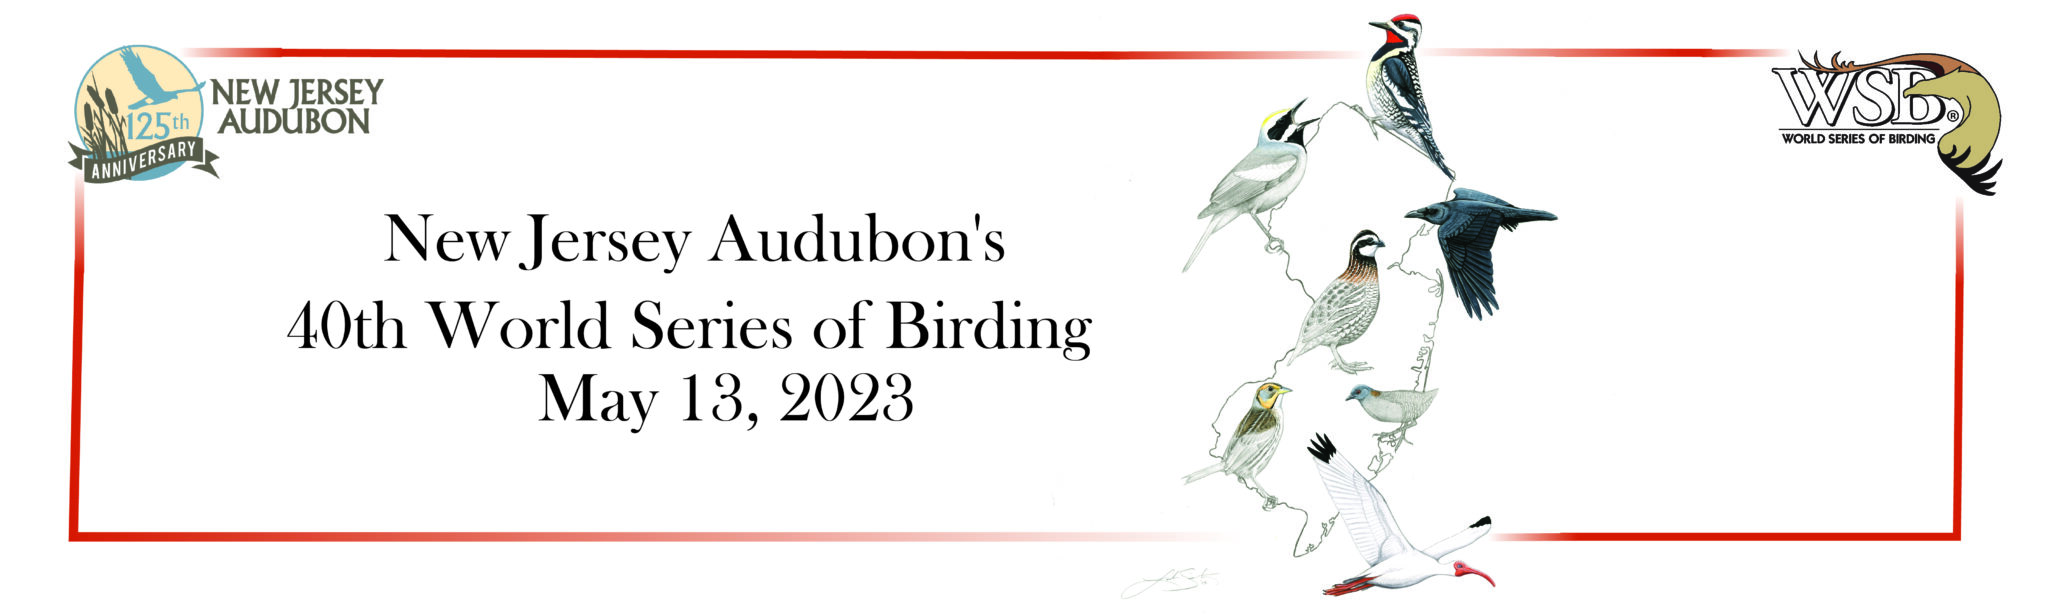 World Series of Birding New Jersey Audubon